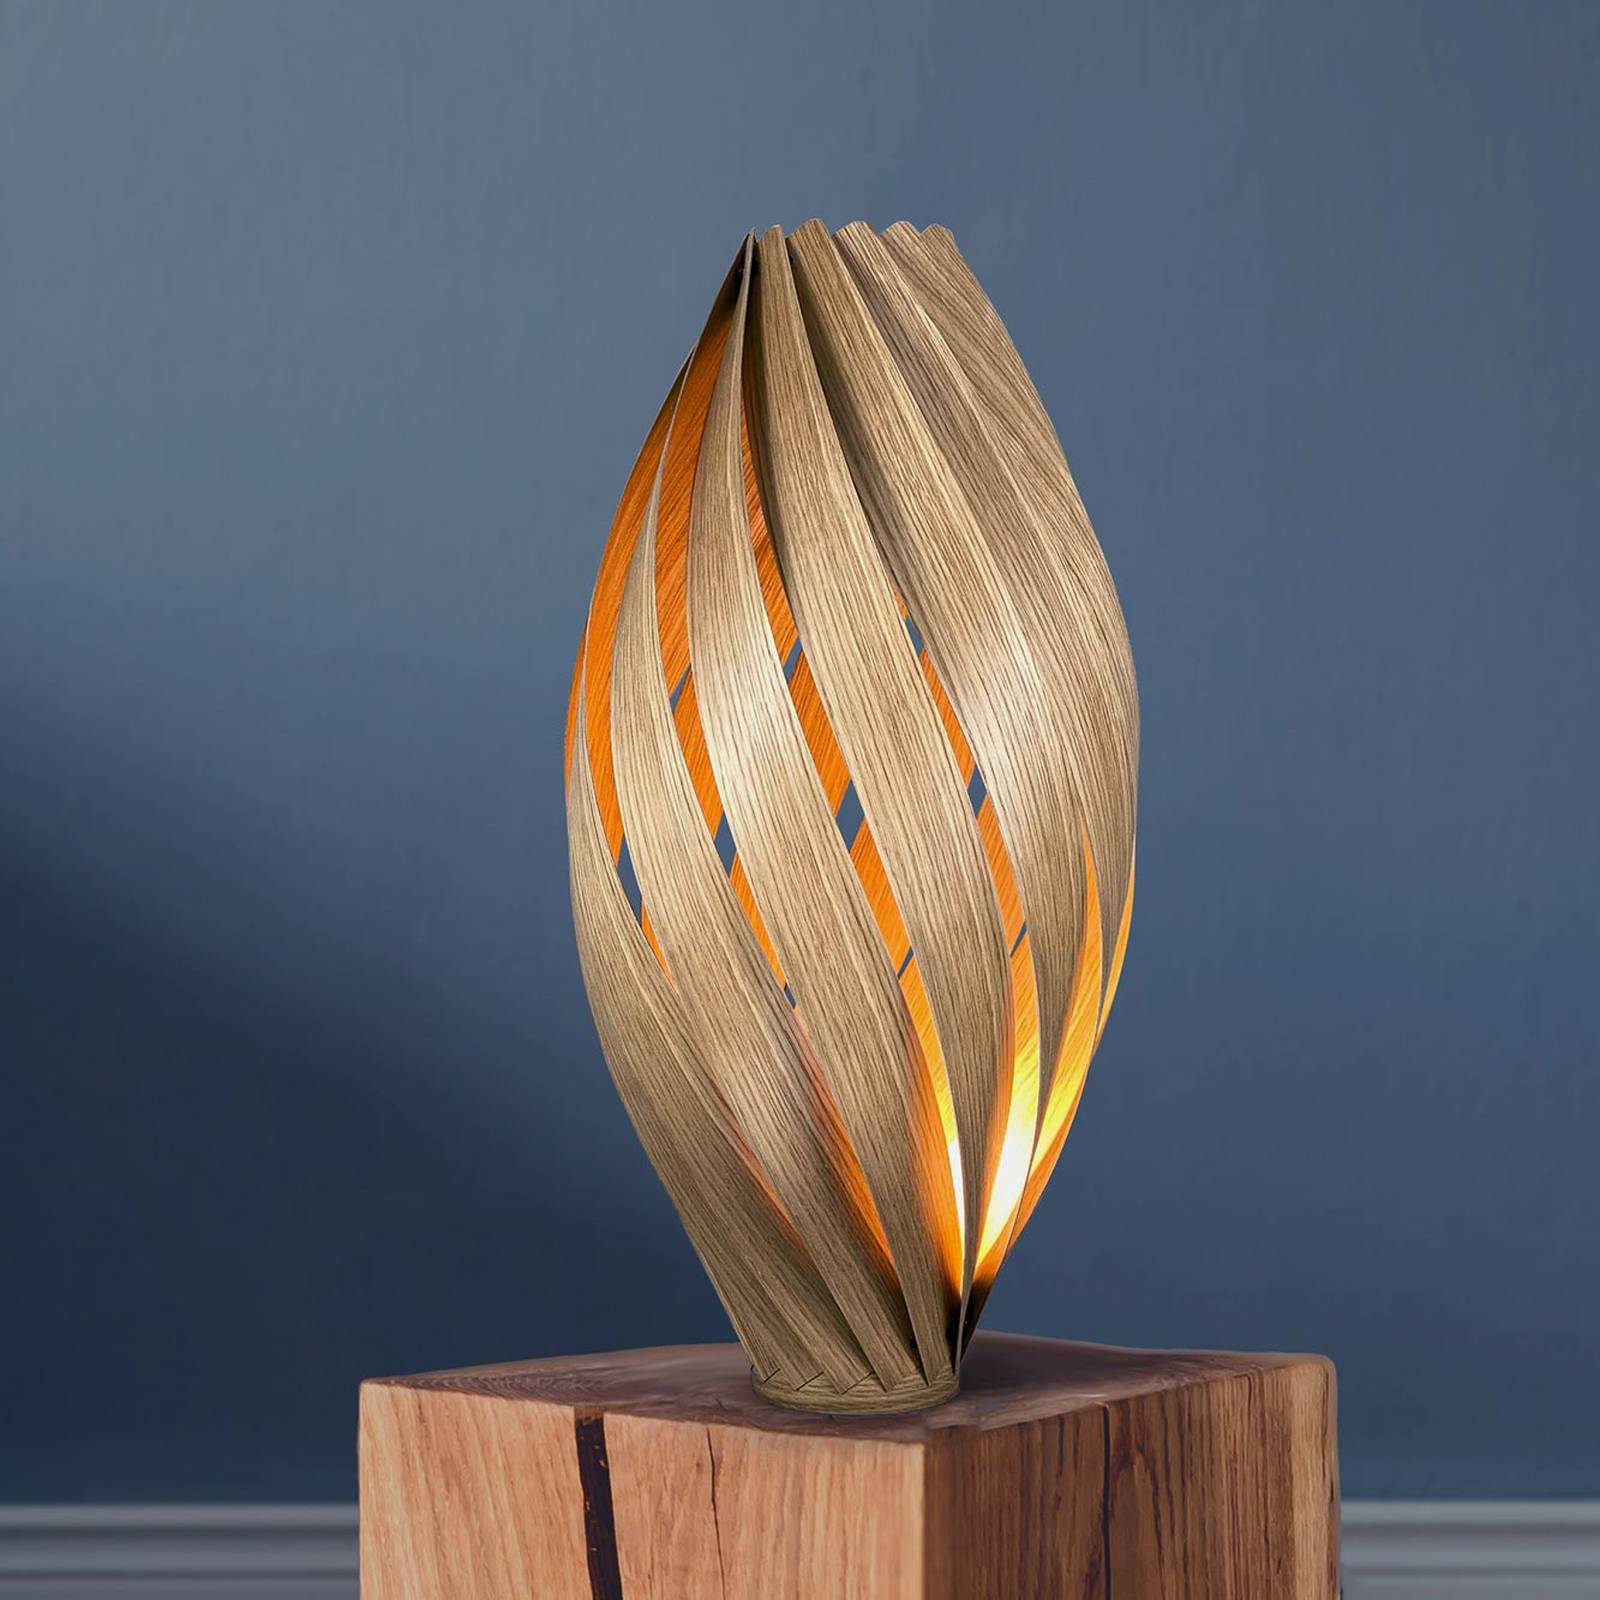 Image of Gofurnit Ardere lampe à poser, chêne, haut 60 cm 4260763610373